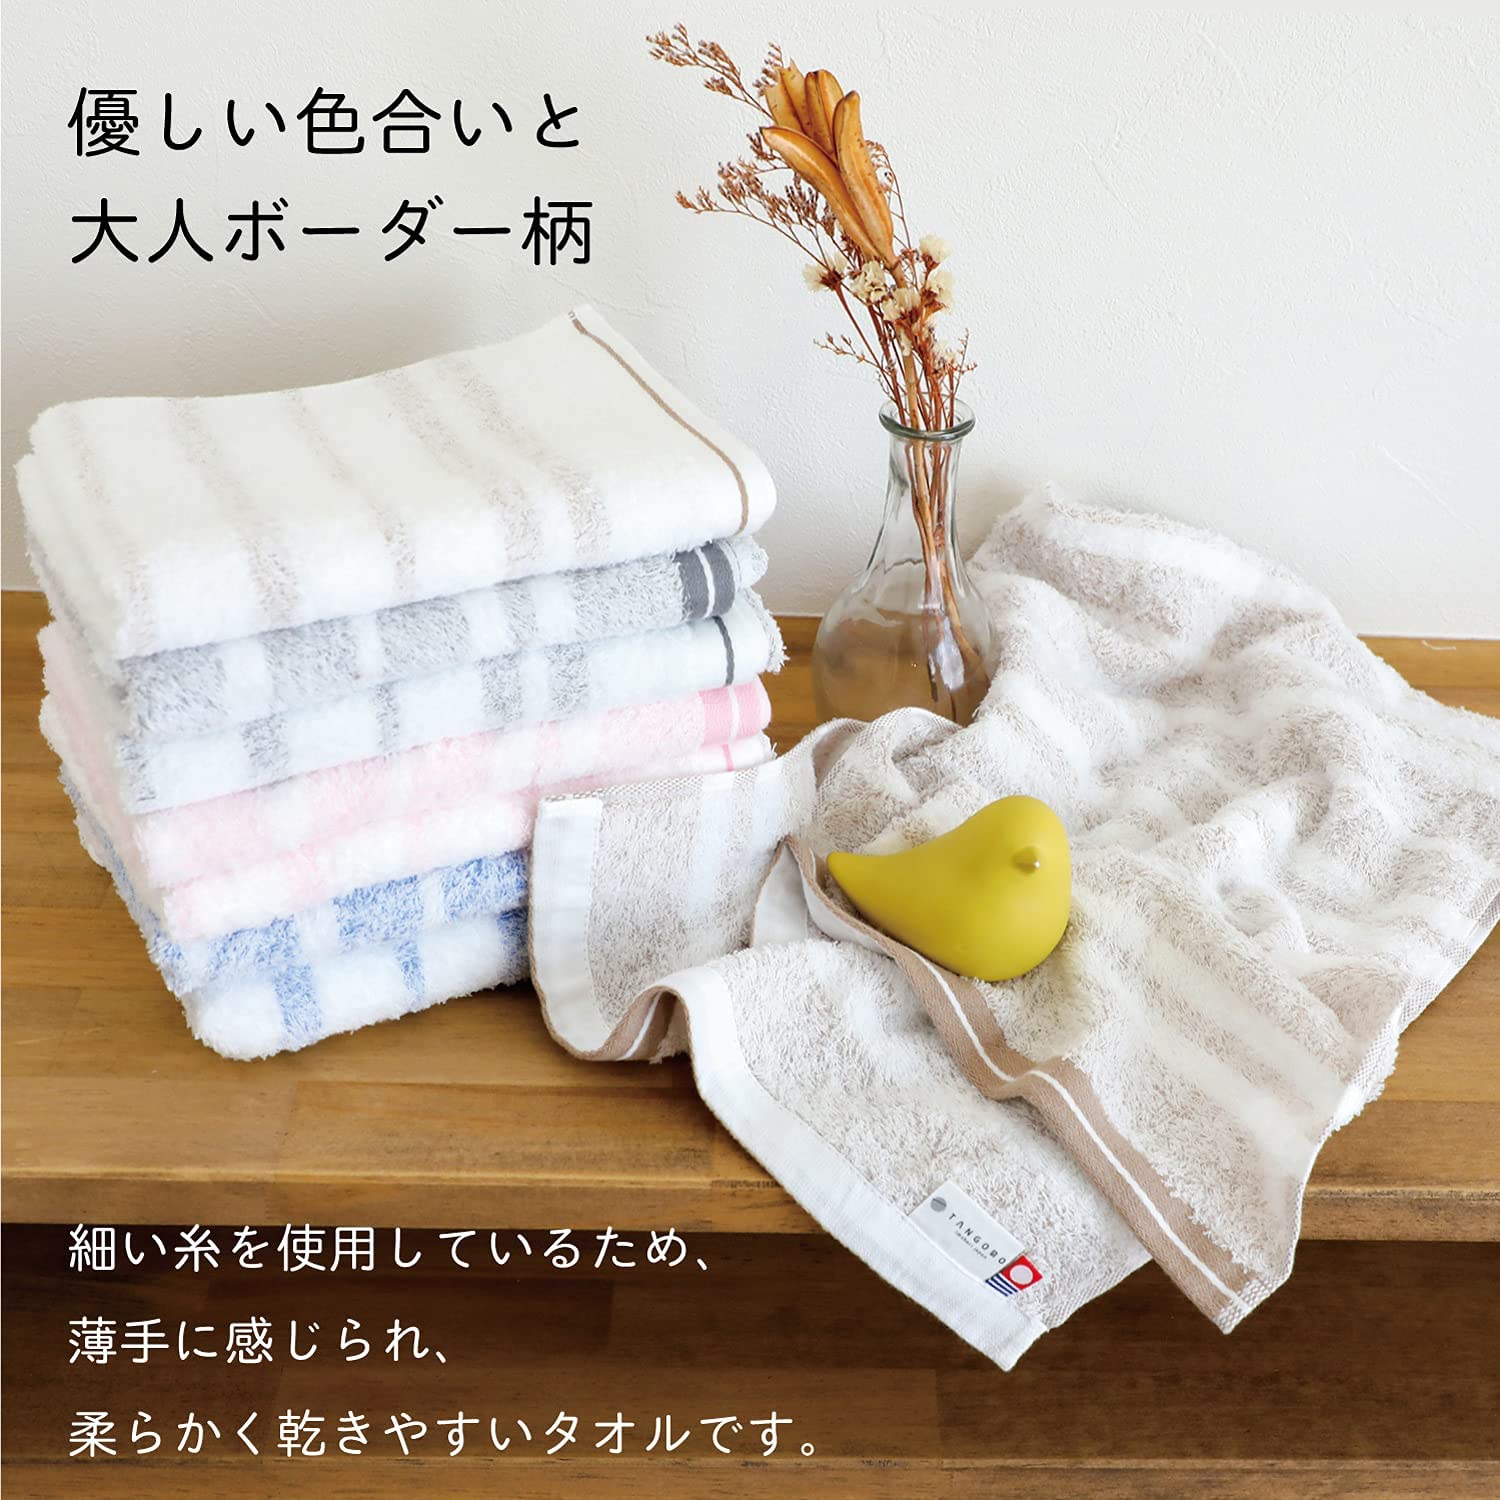 TANGONO(タンゴノ) Border towel バスタオルの商品画像4 